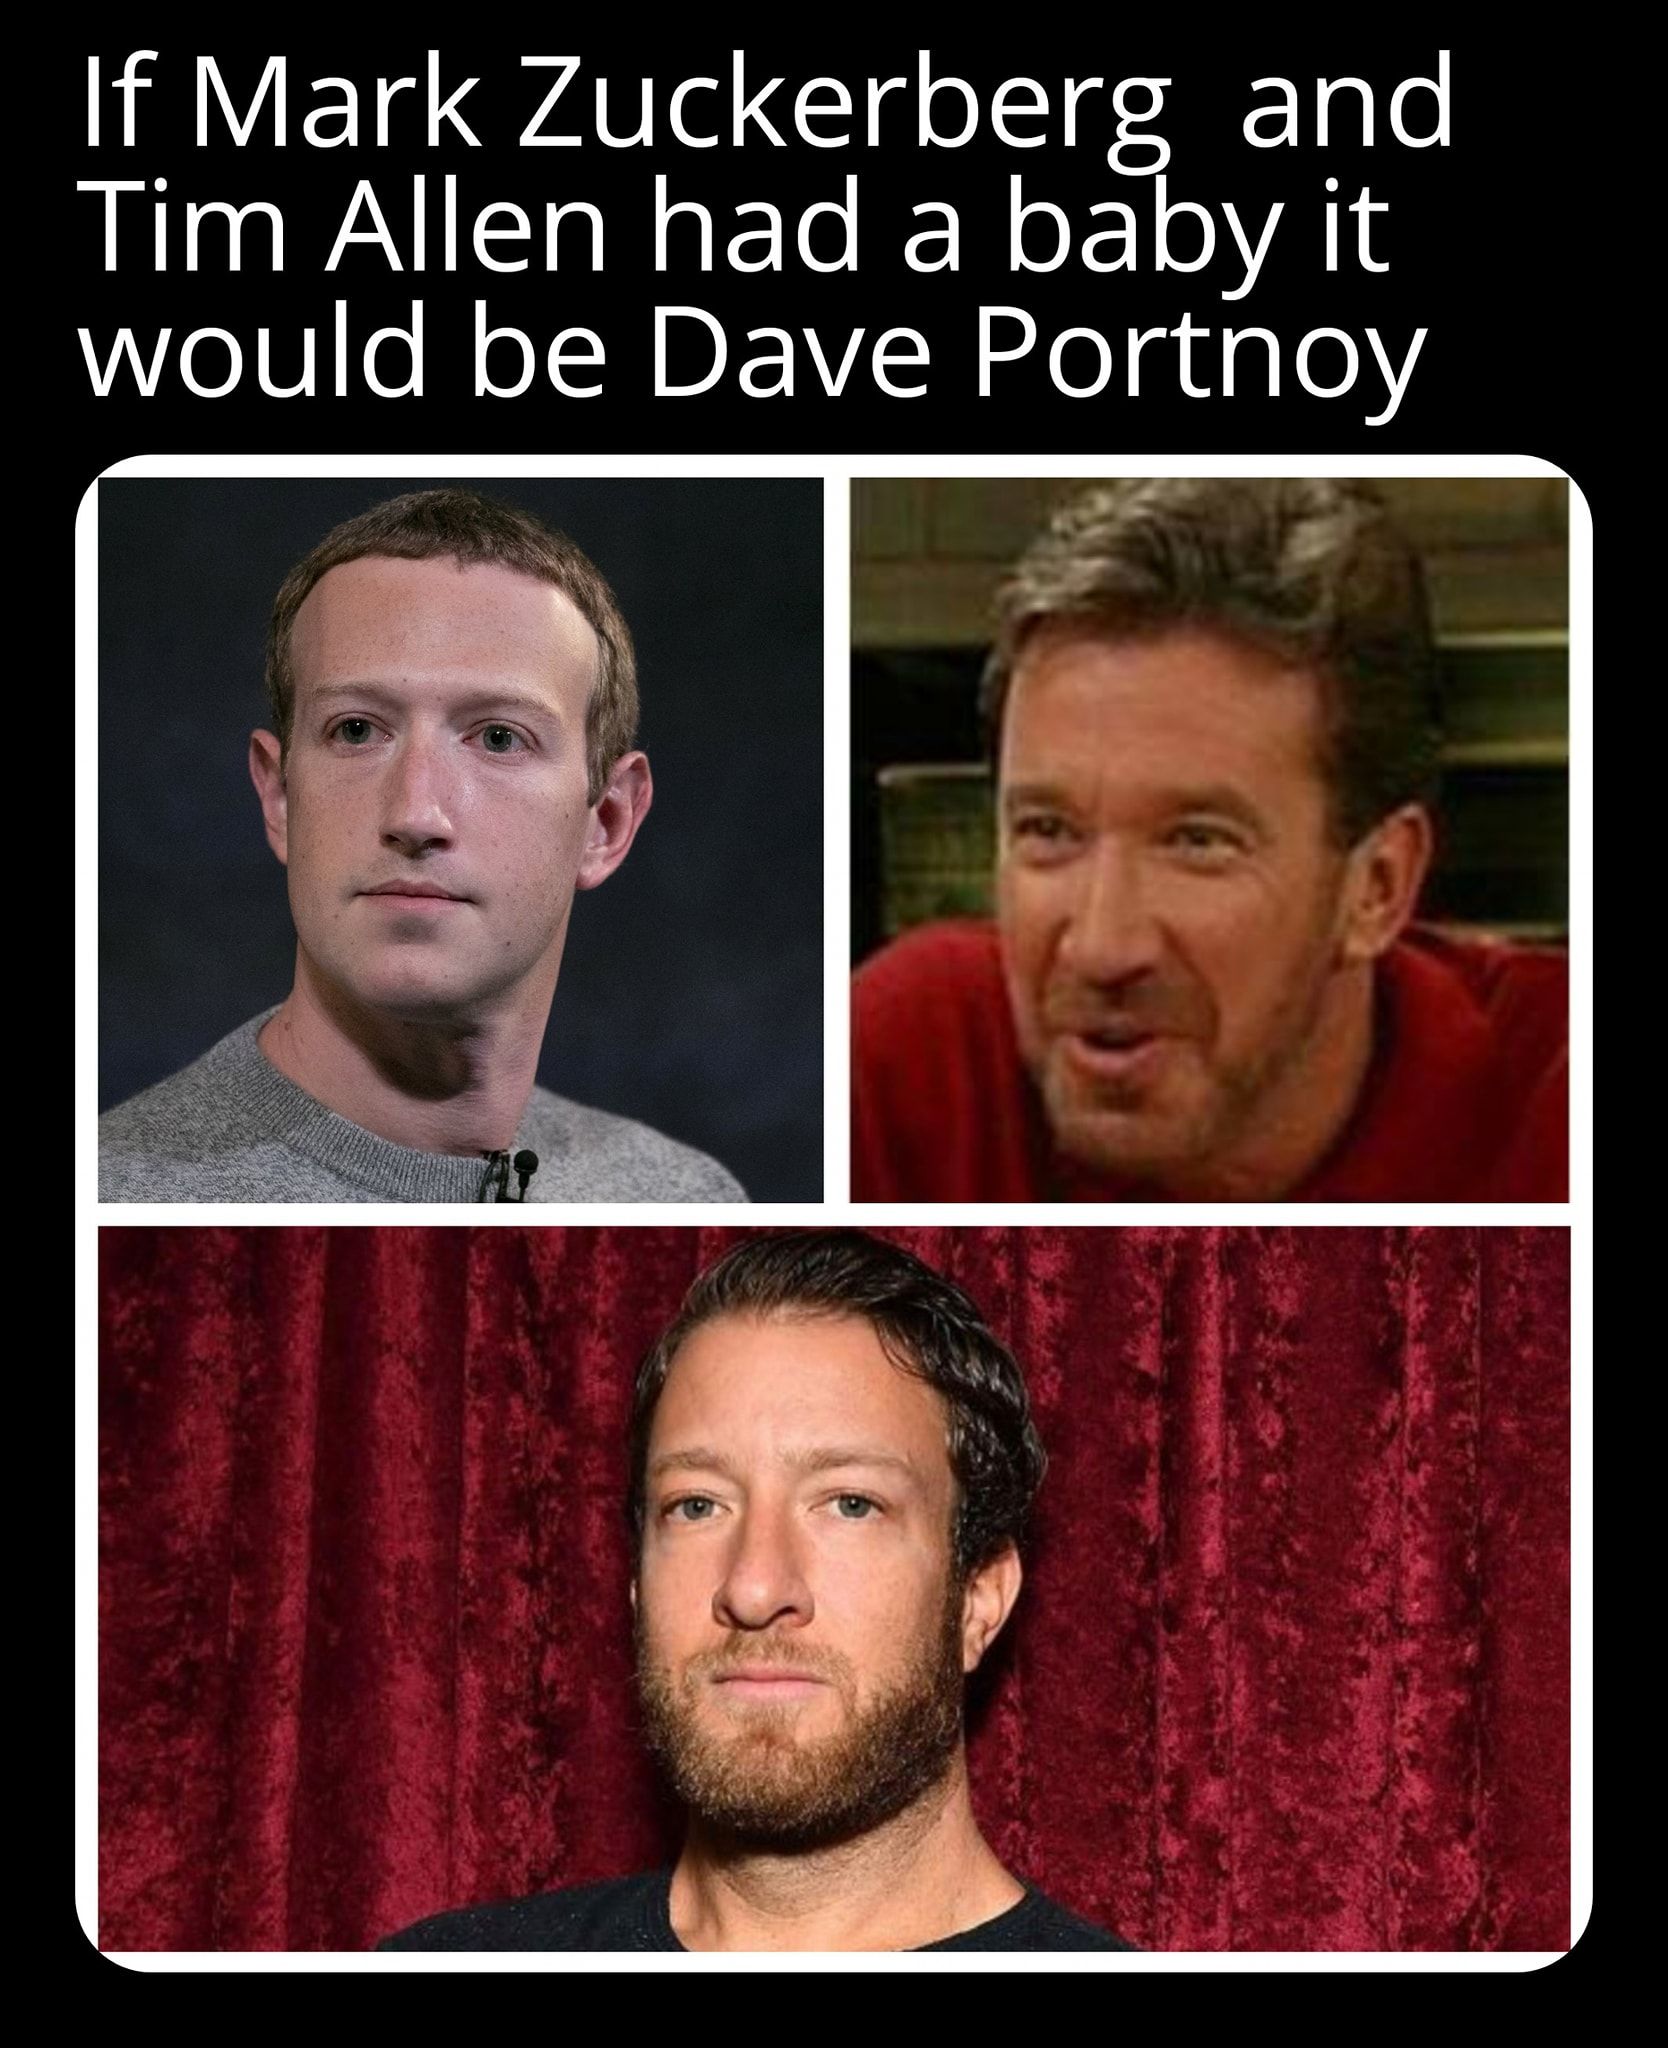 David Portnoy looks like Zuckerberg and Tim Allen's love child